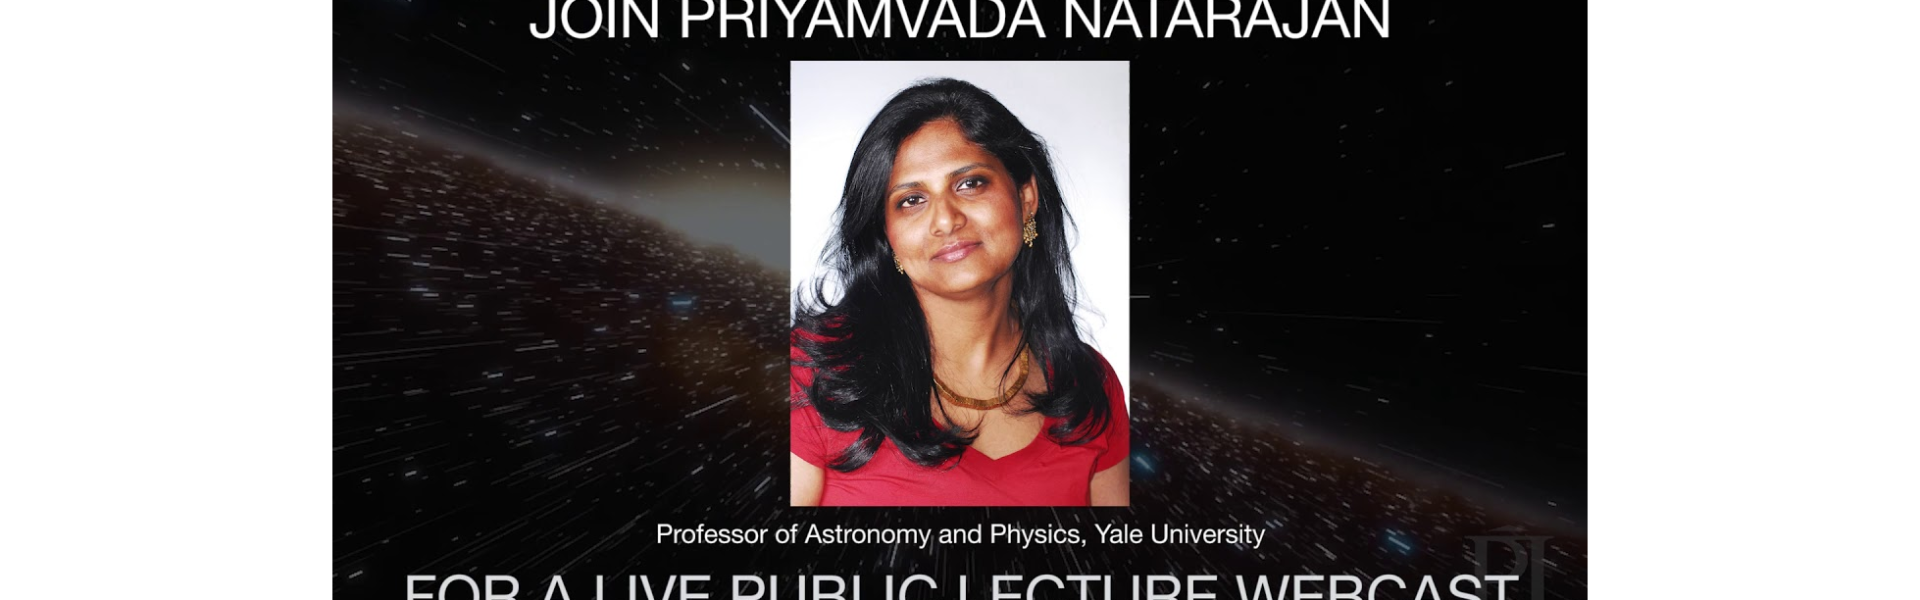 The Invisible Universe: Priyamvada Natarajan live webcast